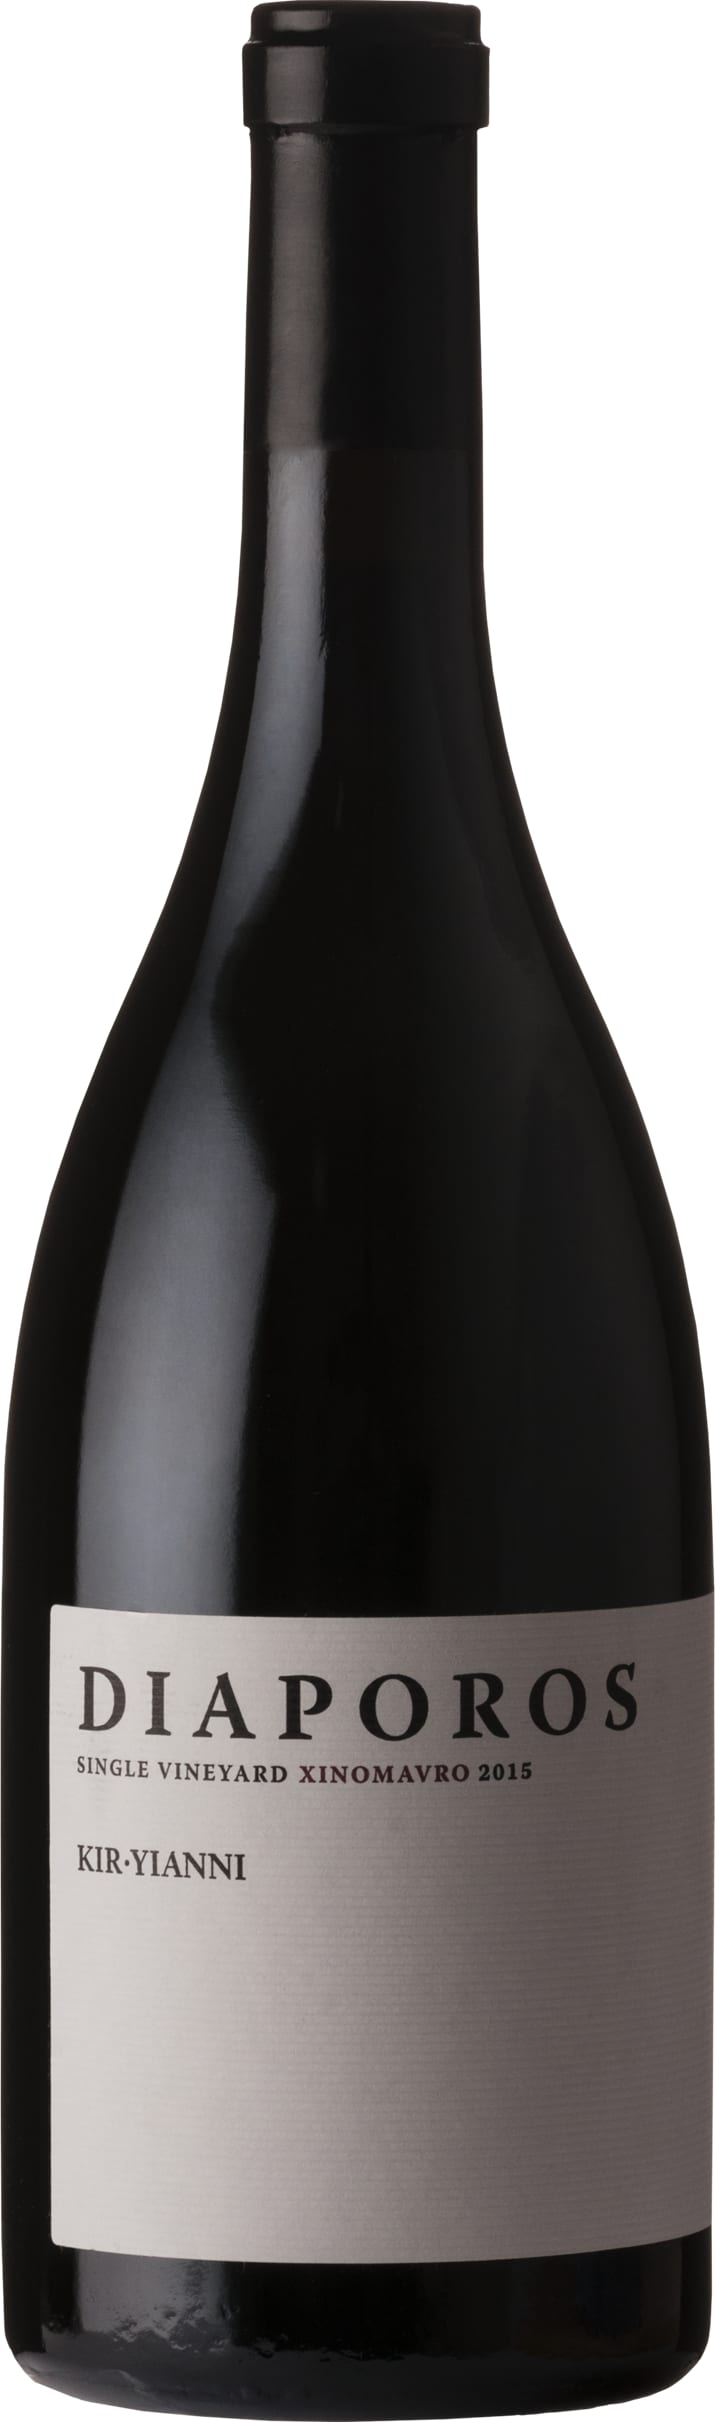 Kir-Yianni Diaporos Single Vineyard Xinomavro 2018 75cl - Buy Kir-Yianni Wines from GREAT WINES DIRECT wine shop